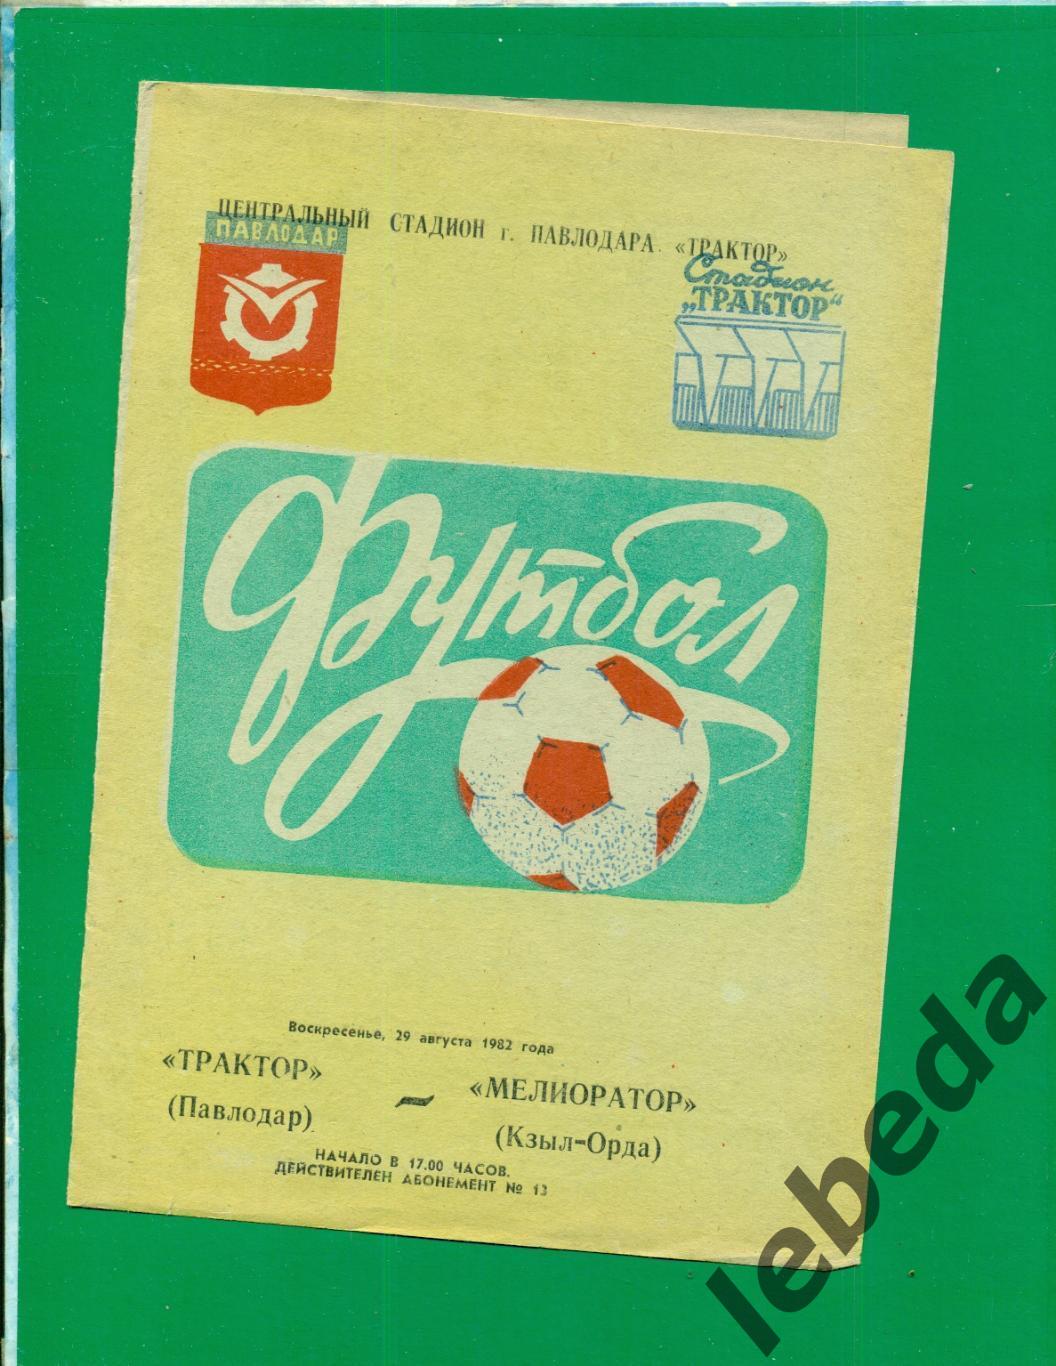 Трактор Павлодар - Мелиоратор Кзыл-Орда - 1982 г. (29.08.82.)